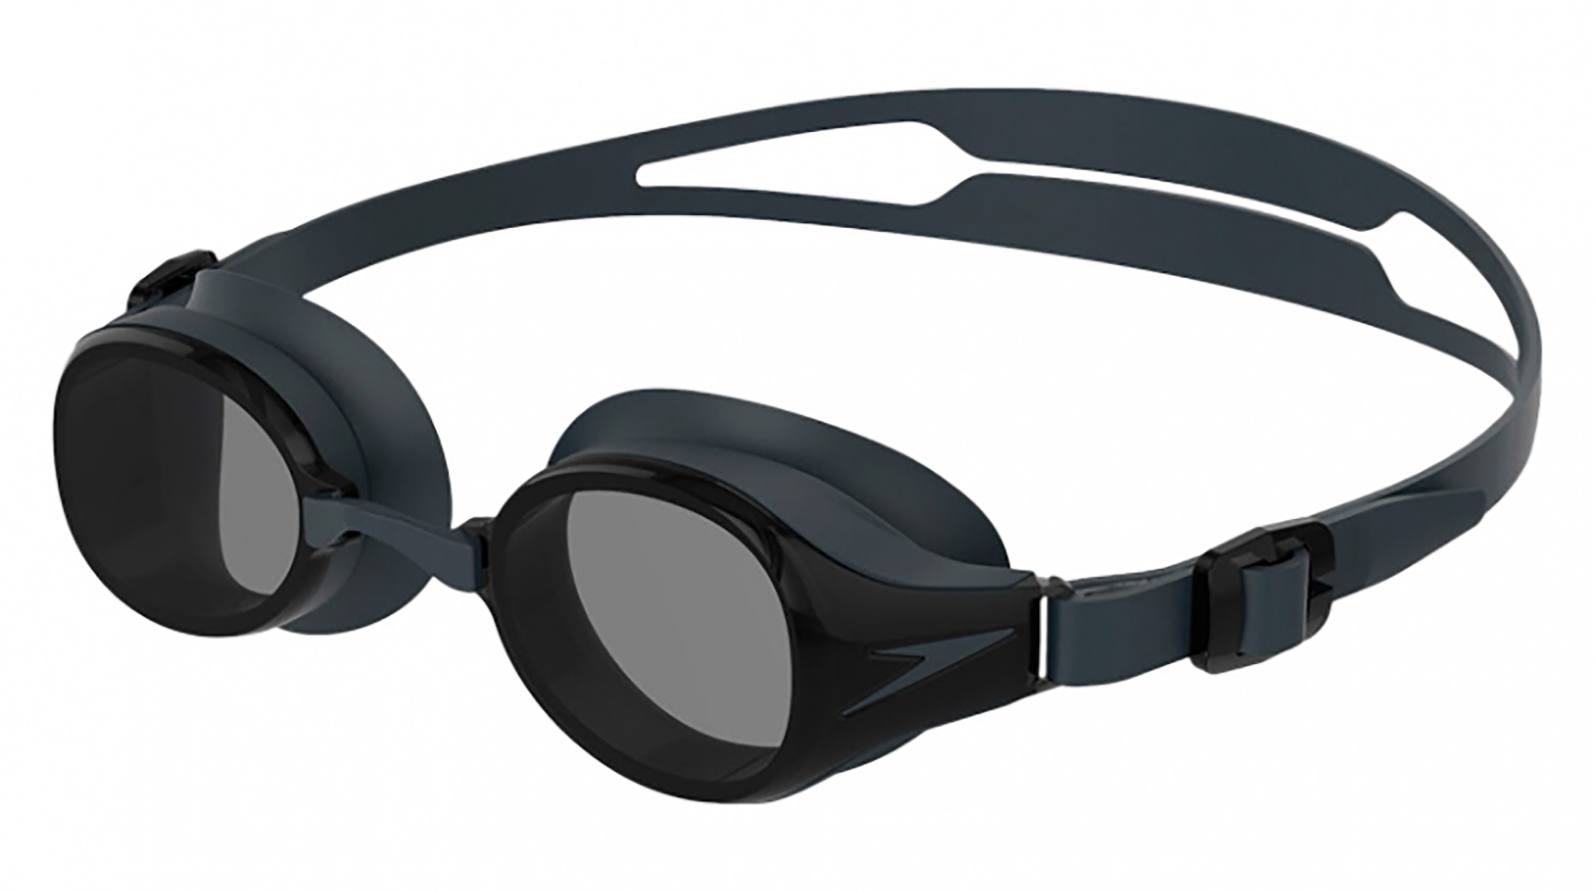 Speedo Очки для плавания Hydropure Optical F808 -2,5 speedo очки для плавания hydropure optical f809 4 5